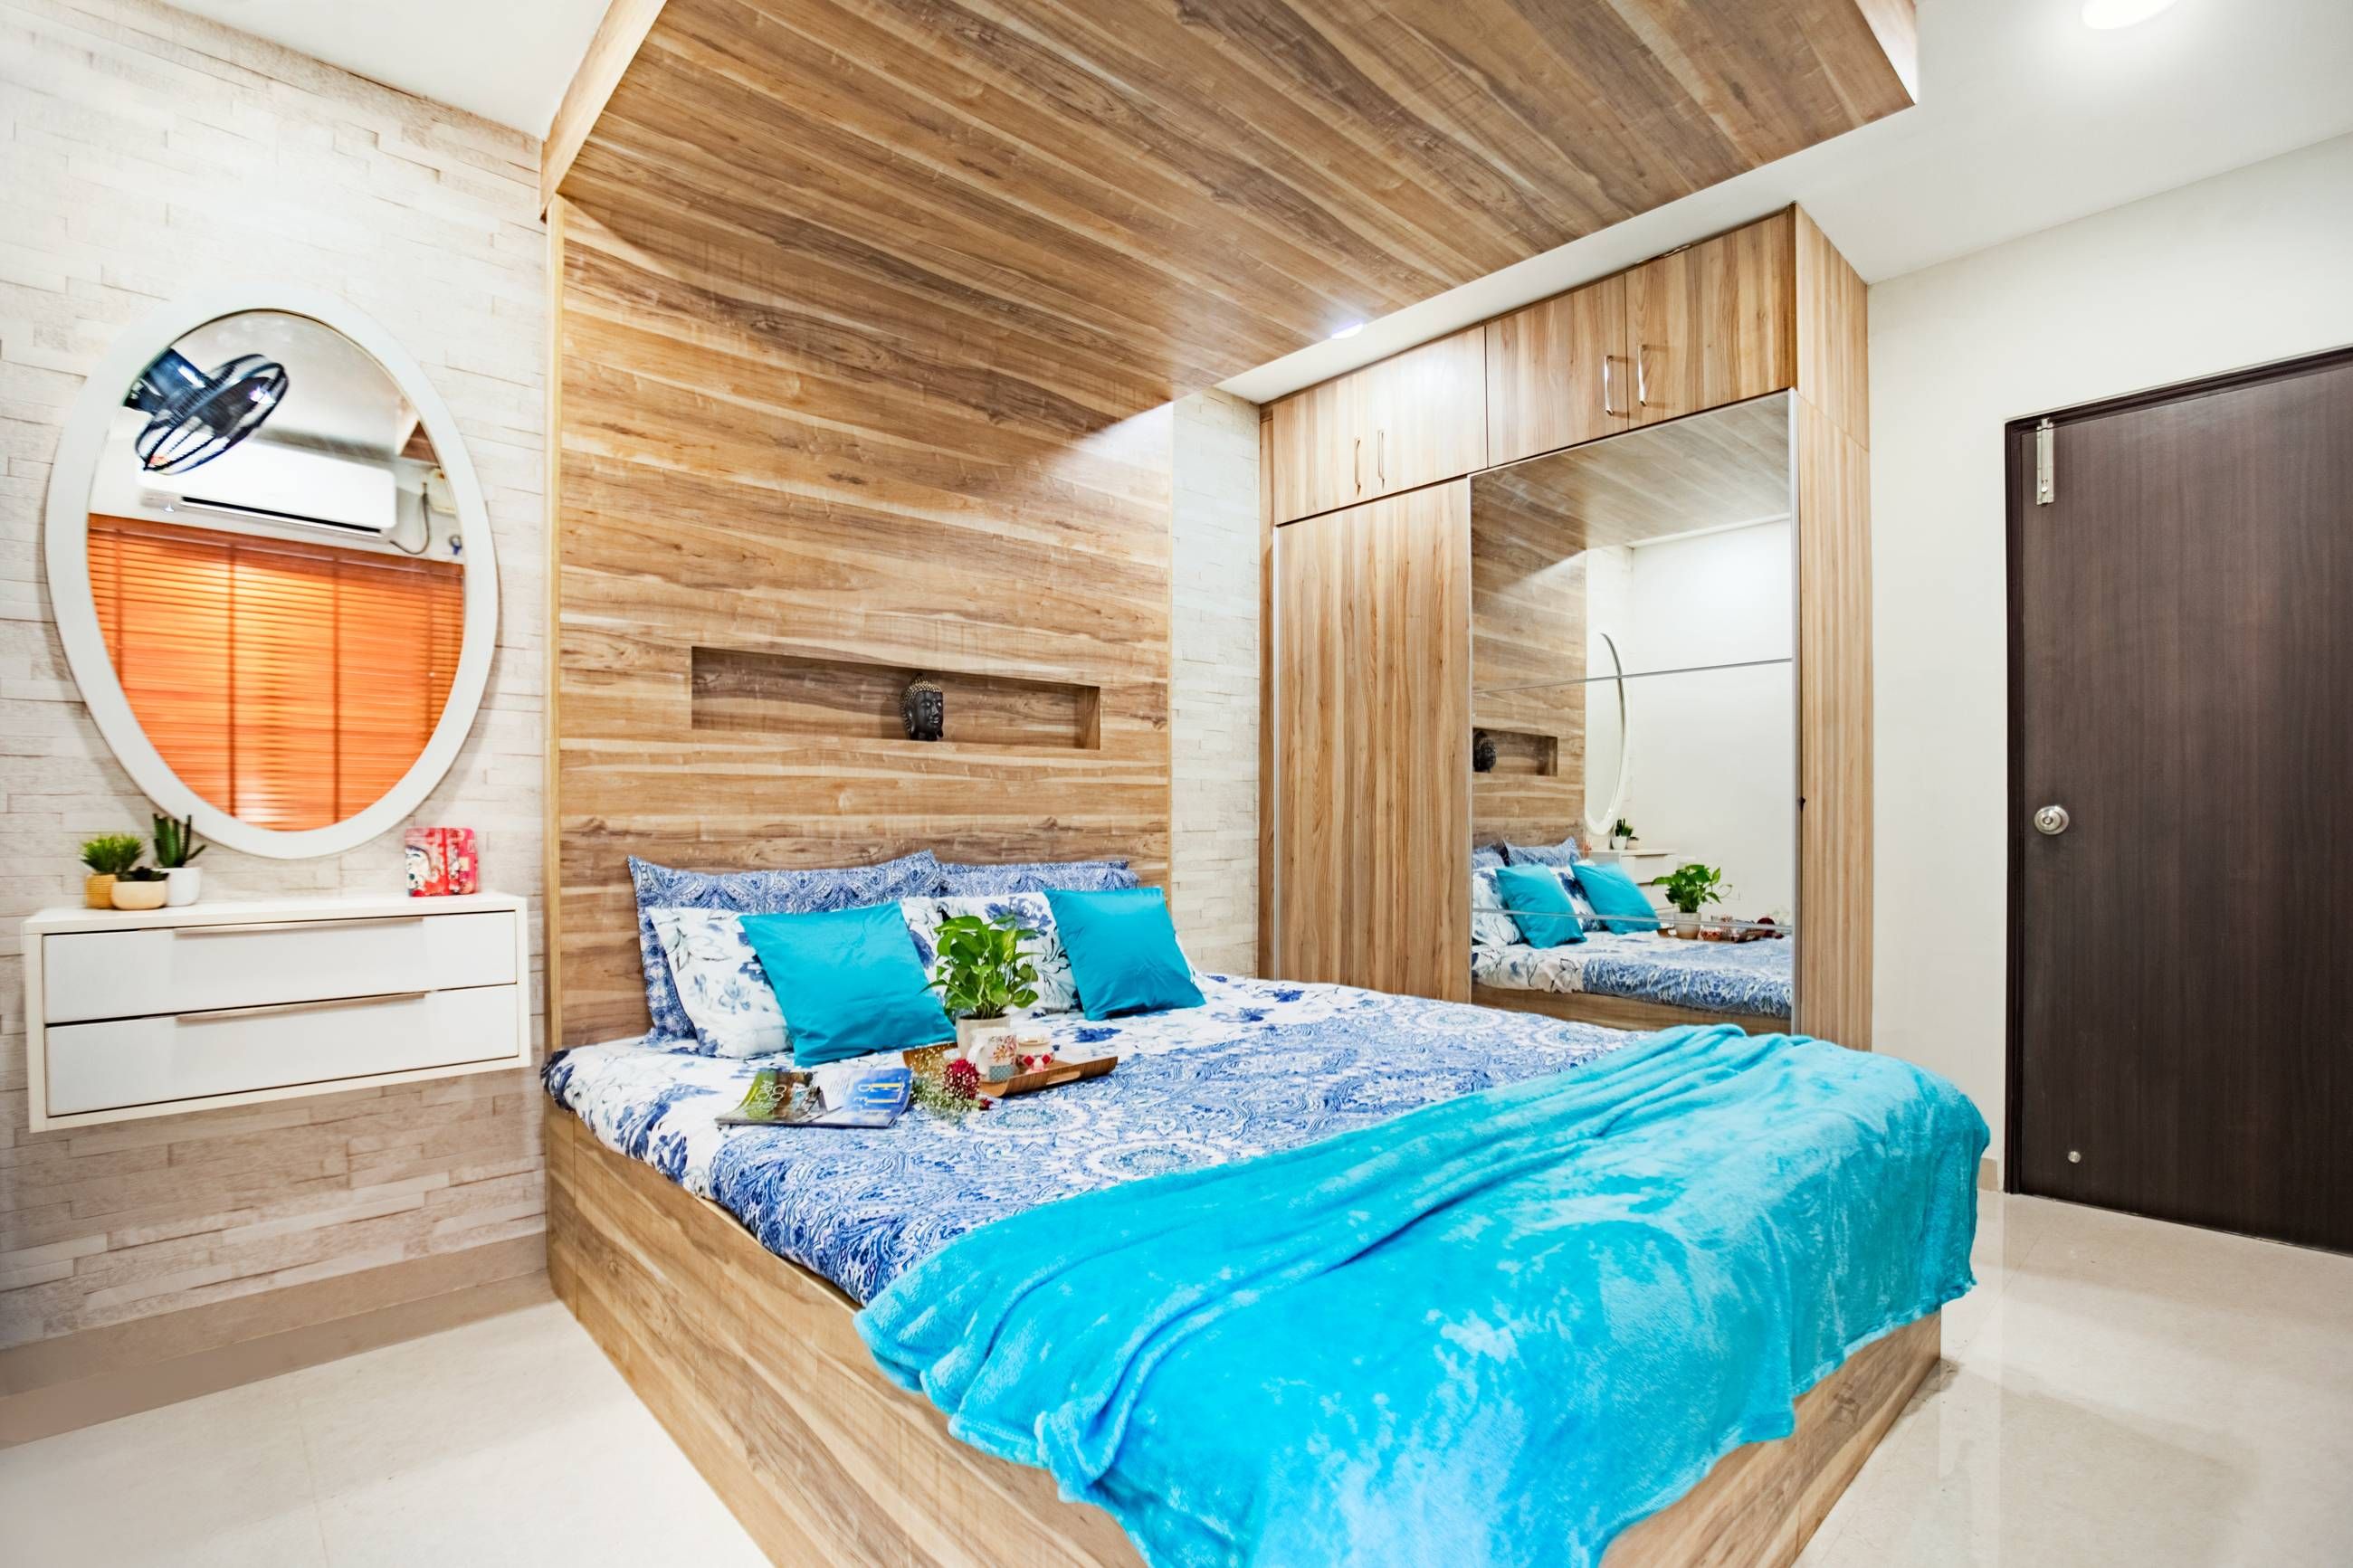 Modern Kid's Room Design With Wooden Back Panel